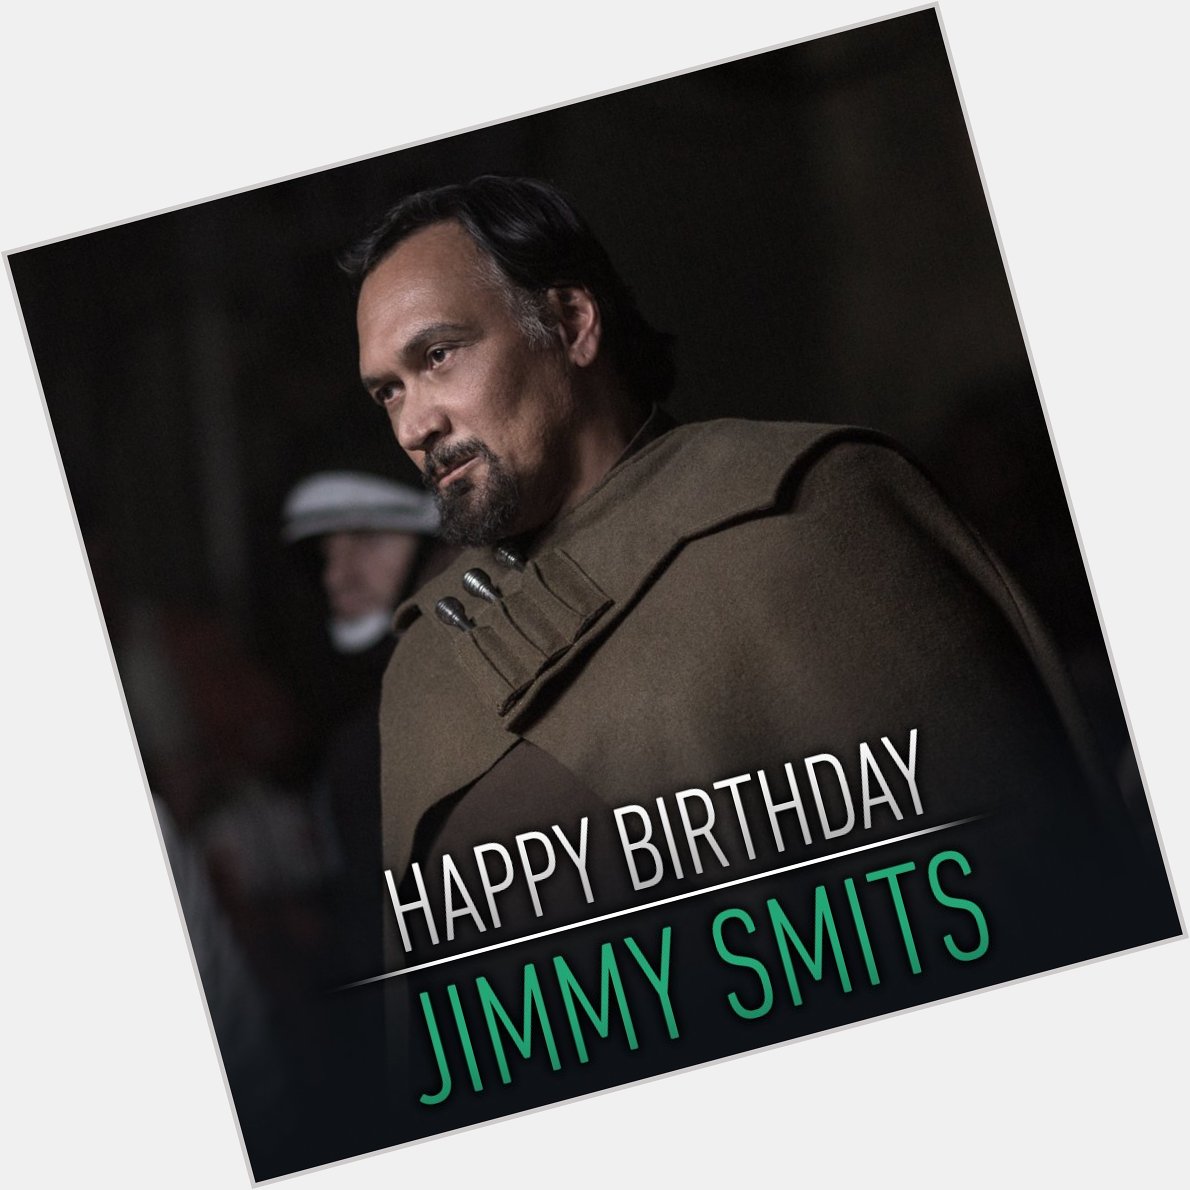 Happy birthday Jimmy Smits aka Bail Organa himself. 